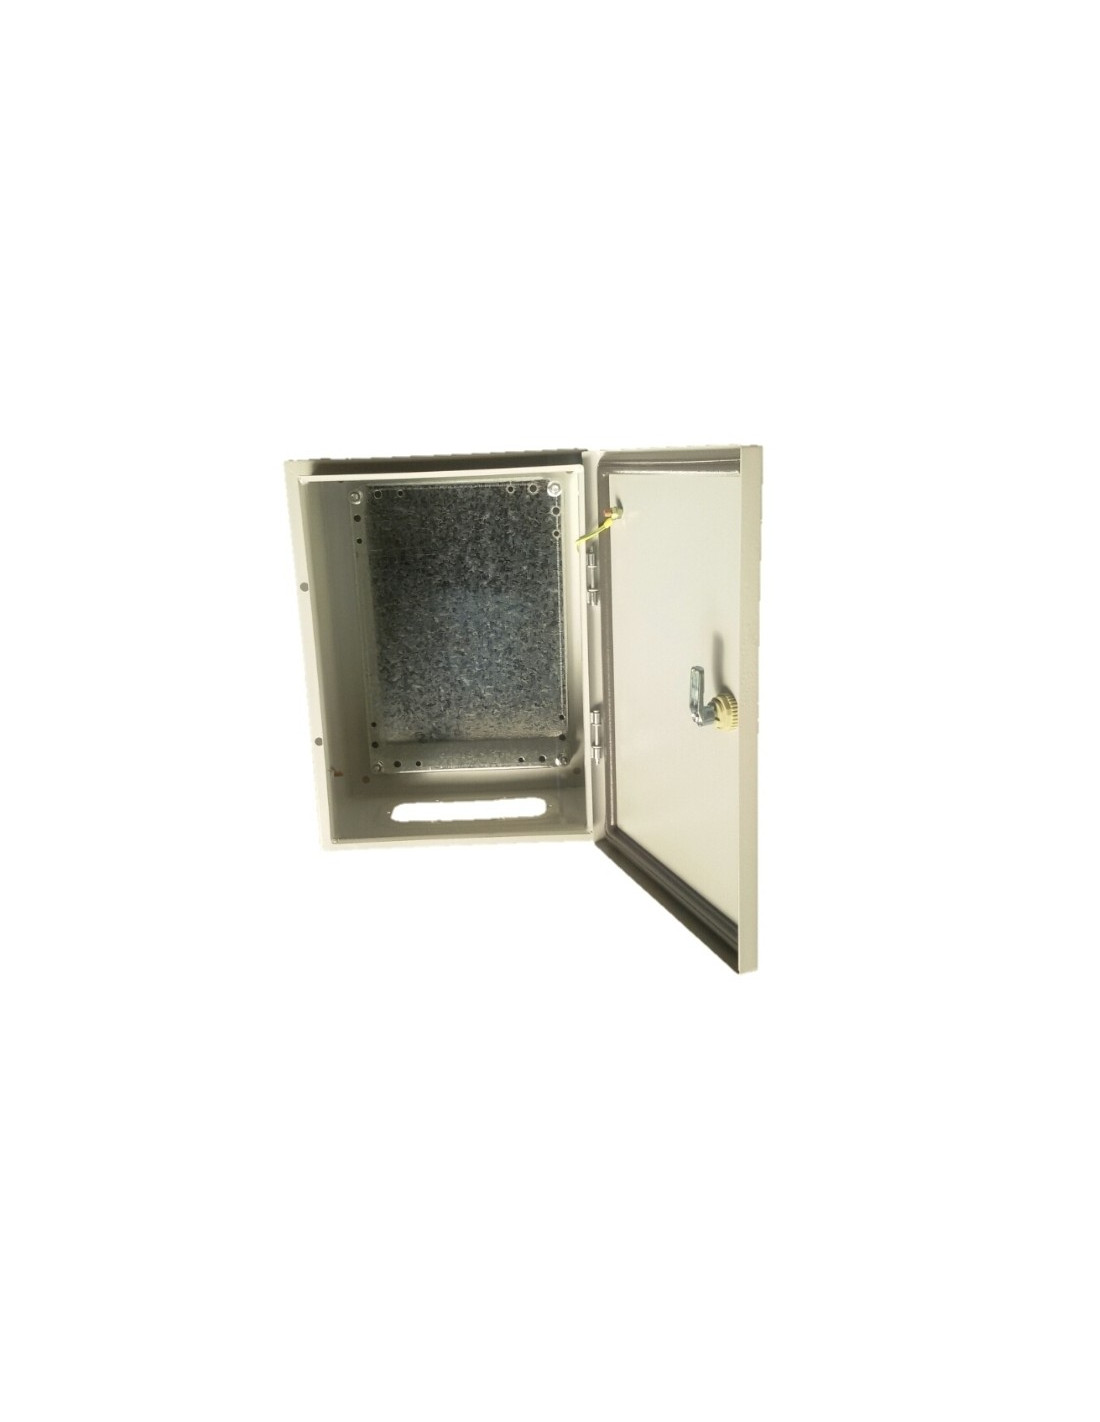 400x300x250 mm Caja Cuadro Electrico Metalicas Exterior, Armario